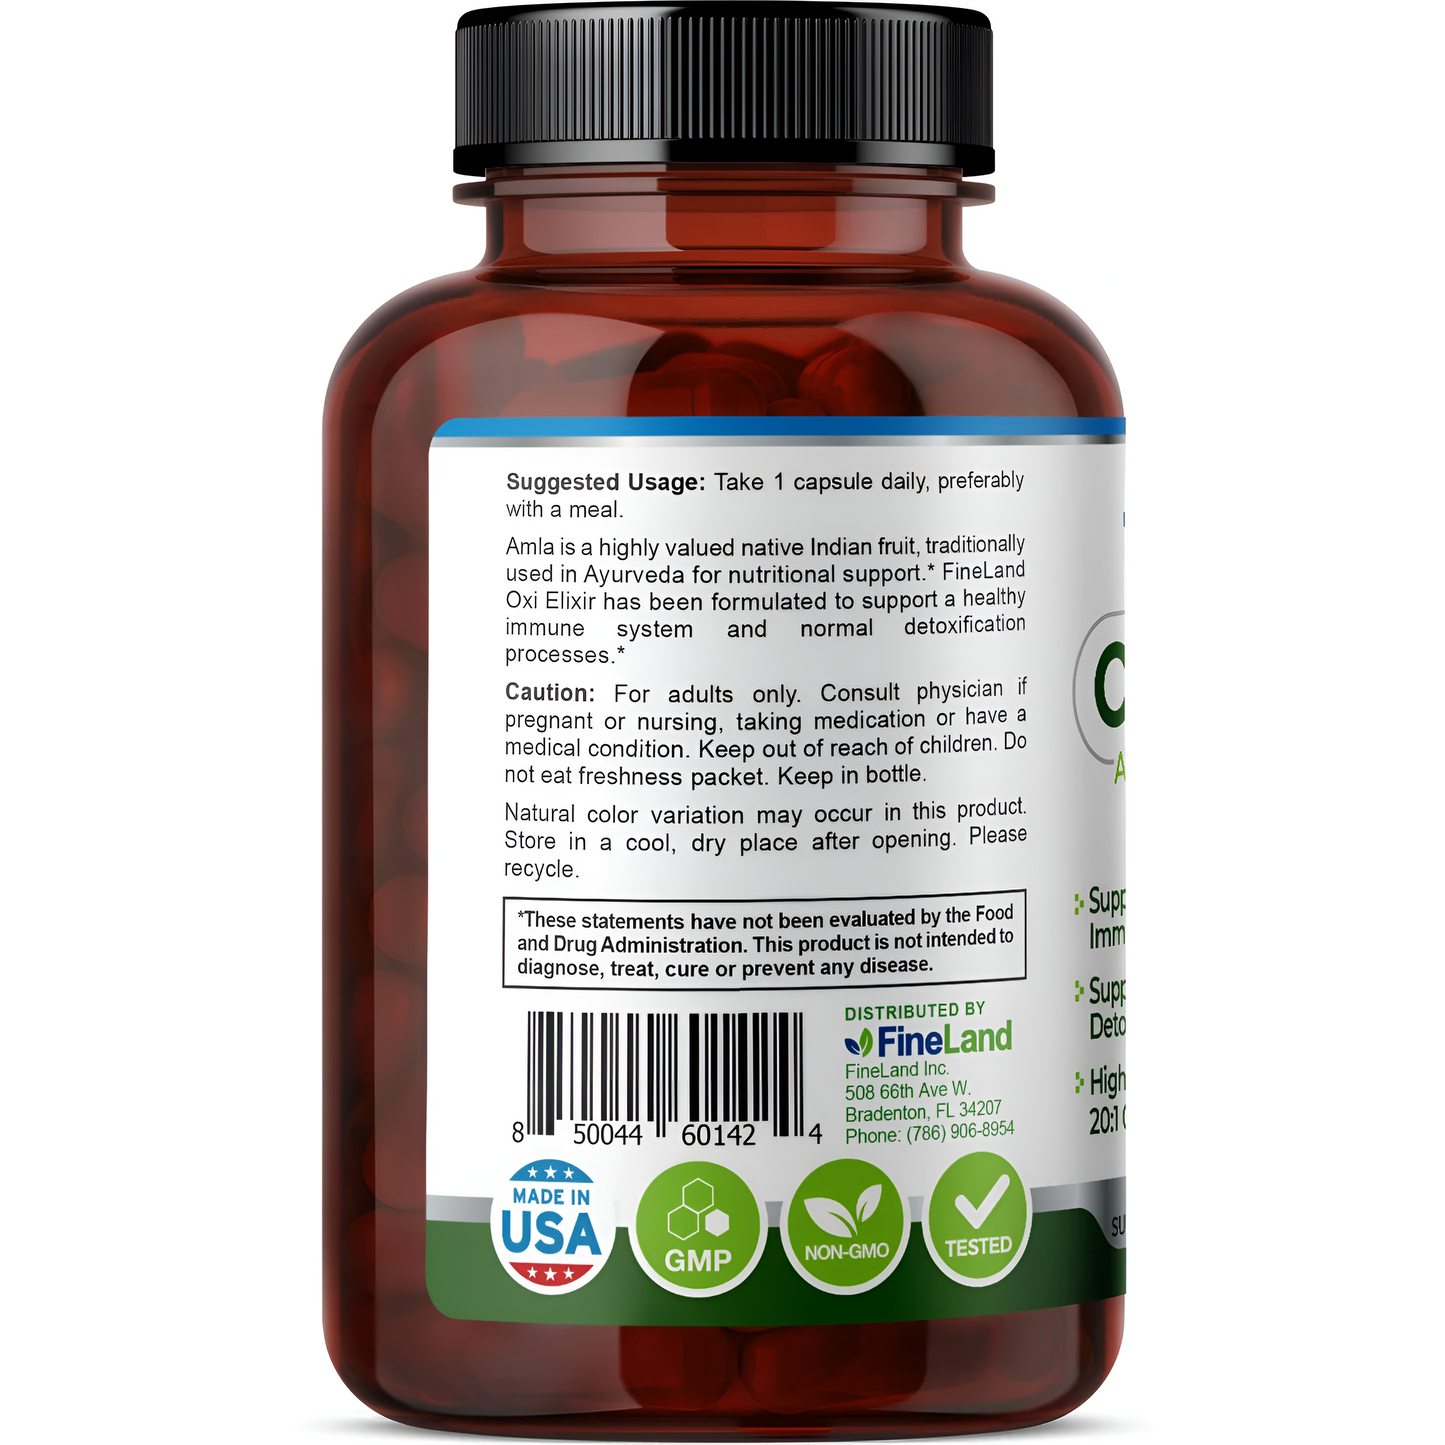 Oxi Elixir Amla Fruit + Bioperine 10,000mg-Fineland , 90 capsulas